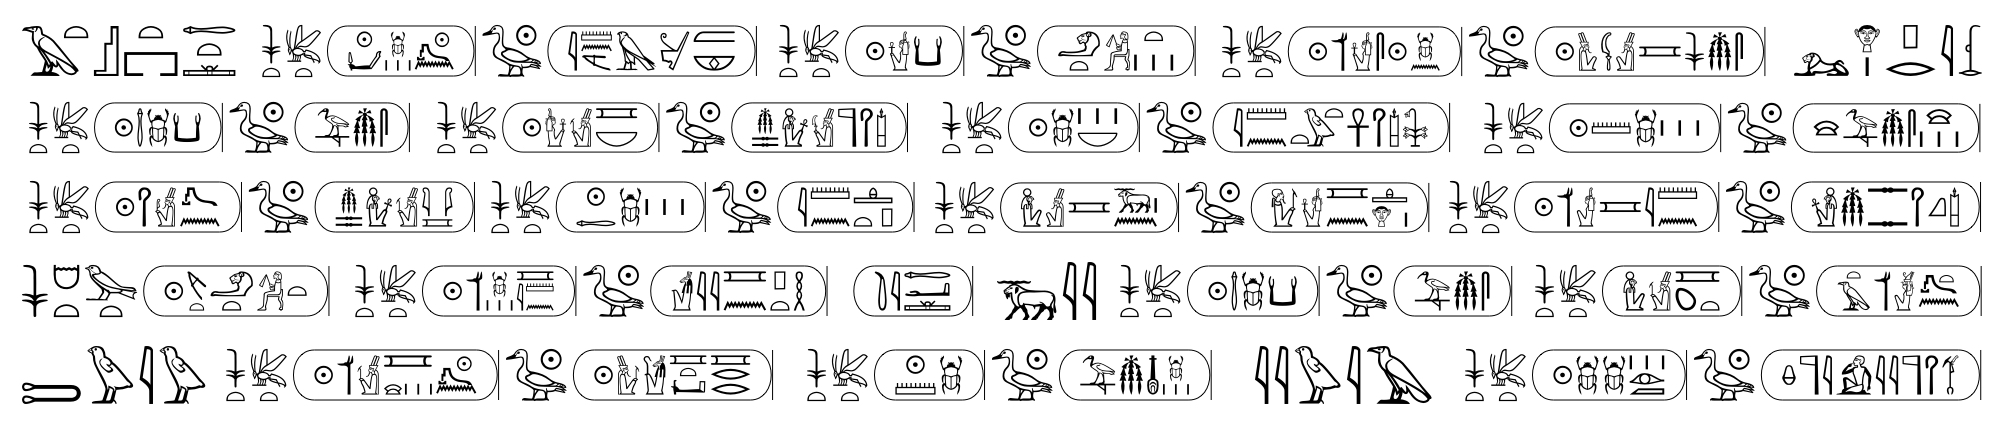 Sample of hieroglypics